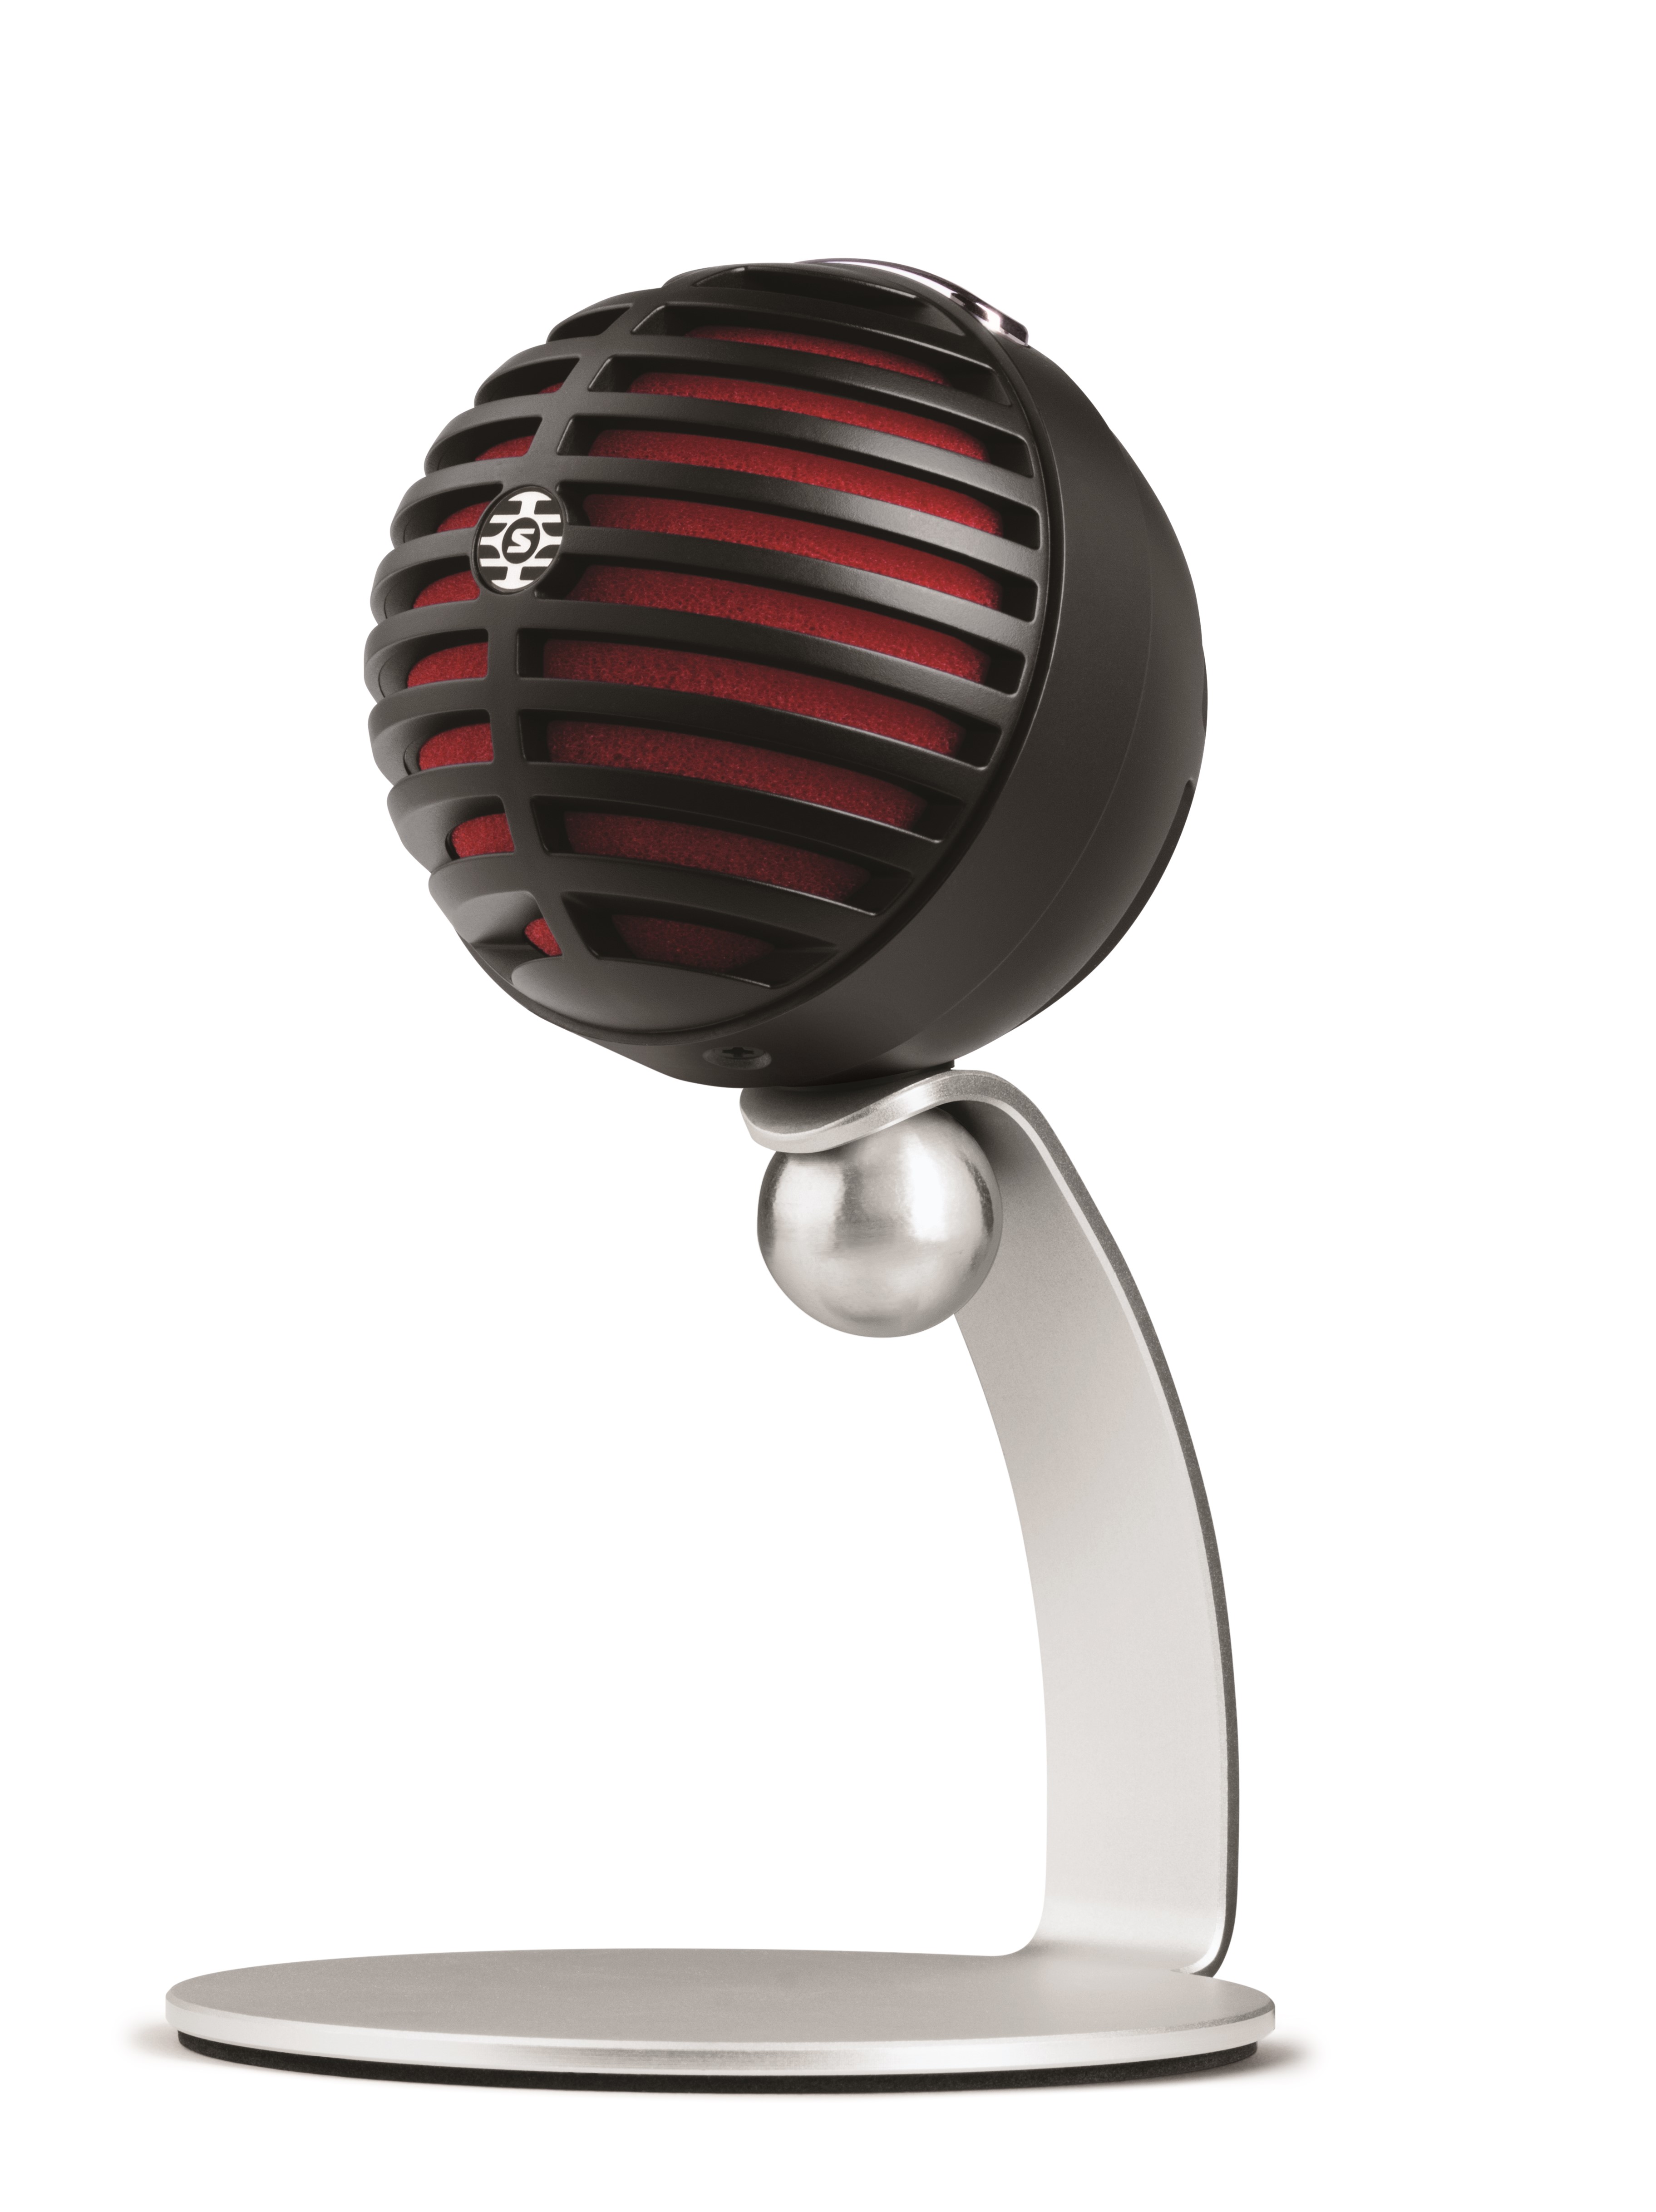 SHURE MV5 Digital Condenser Microphone